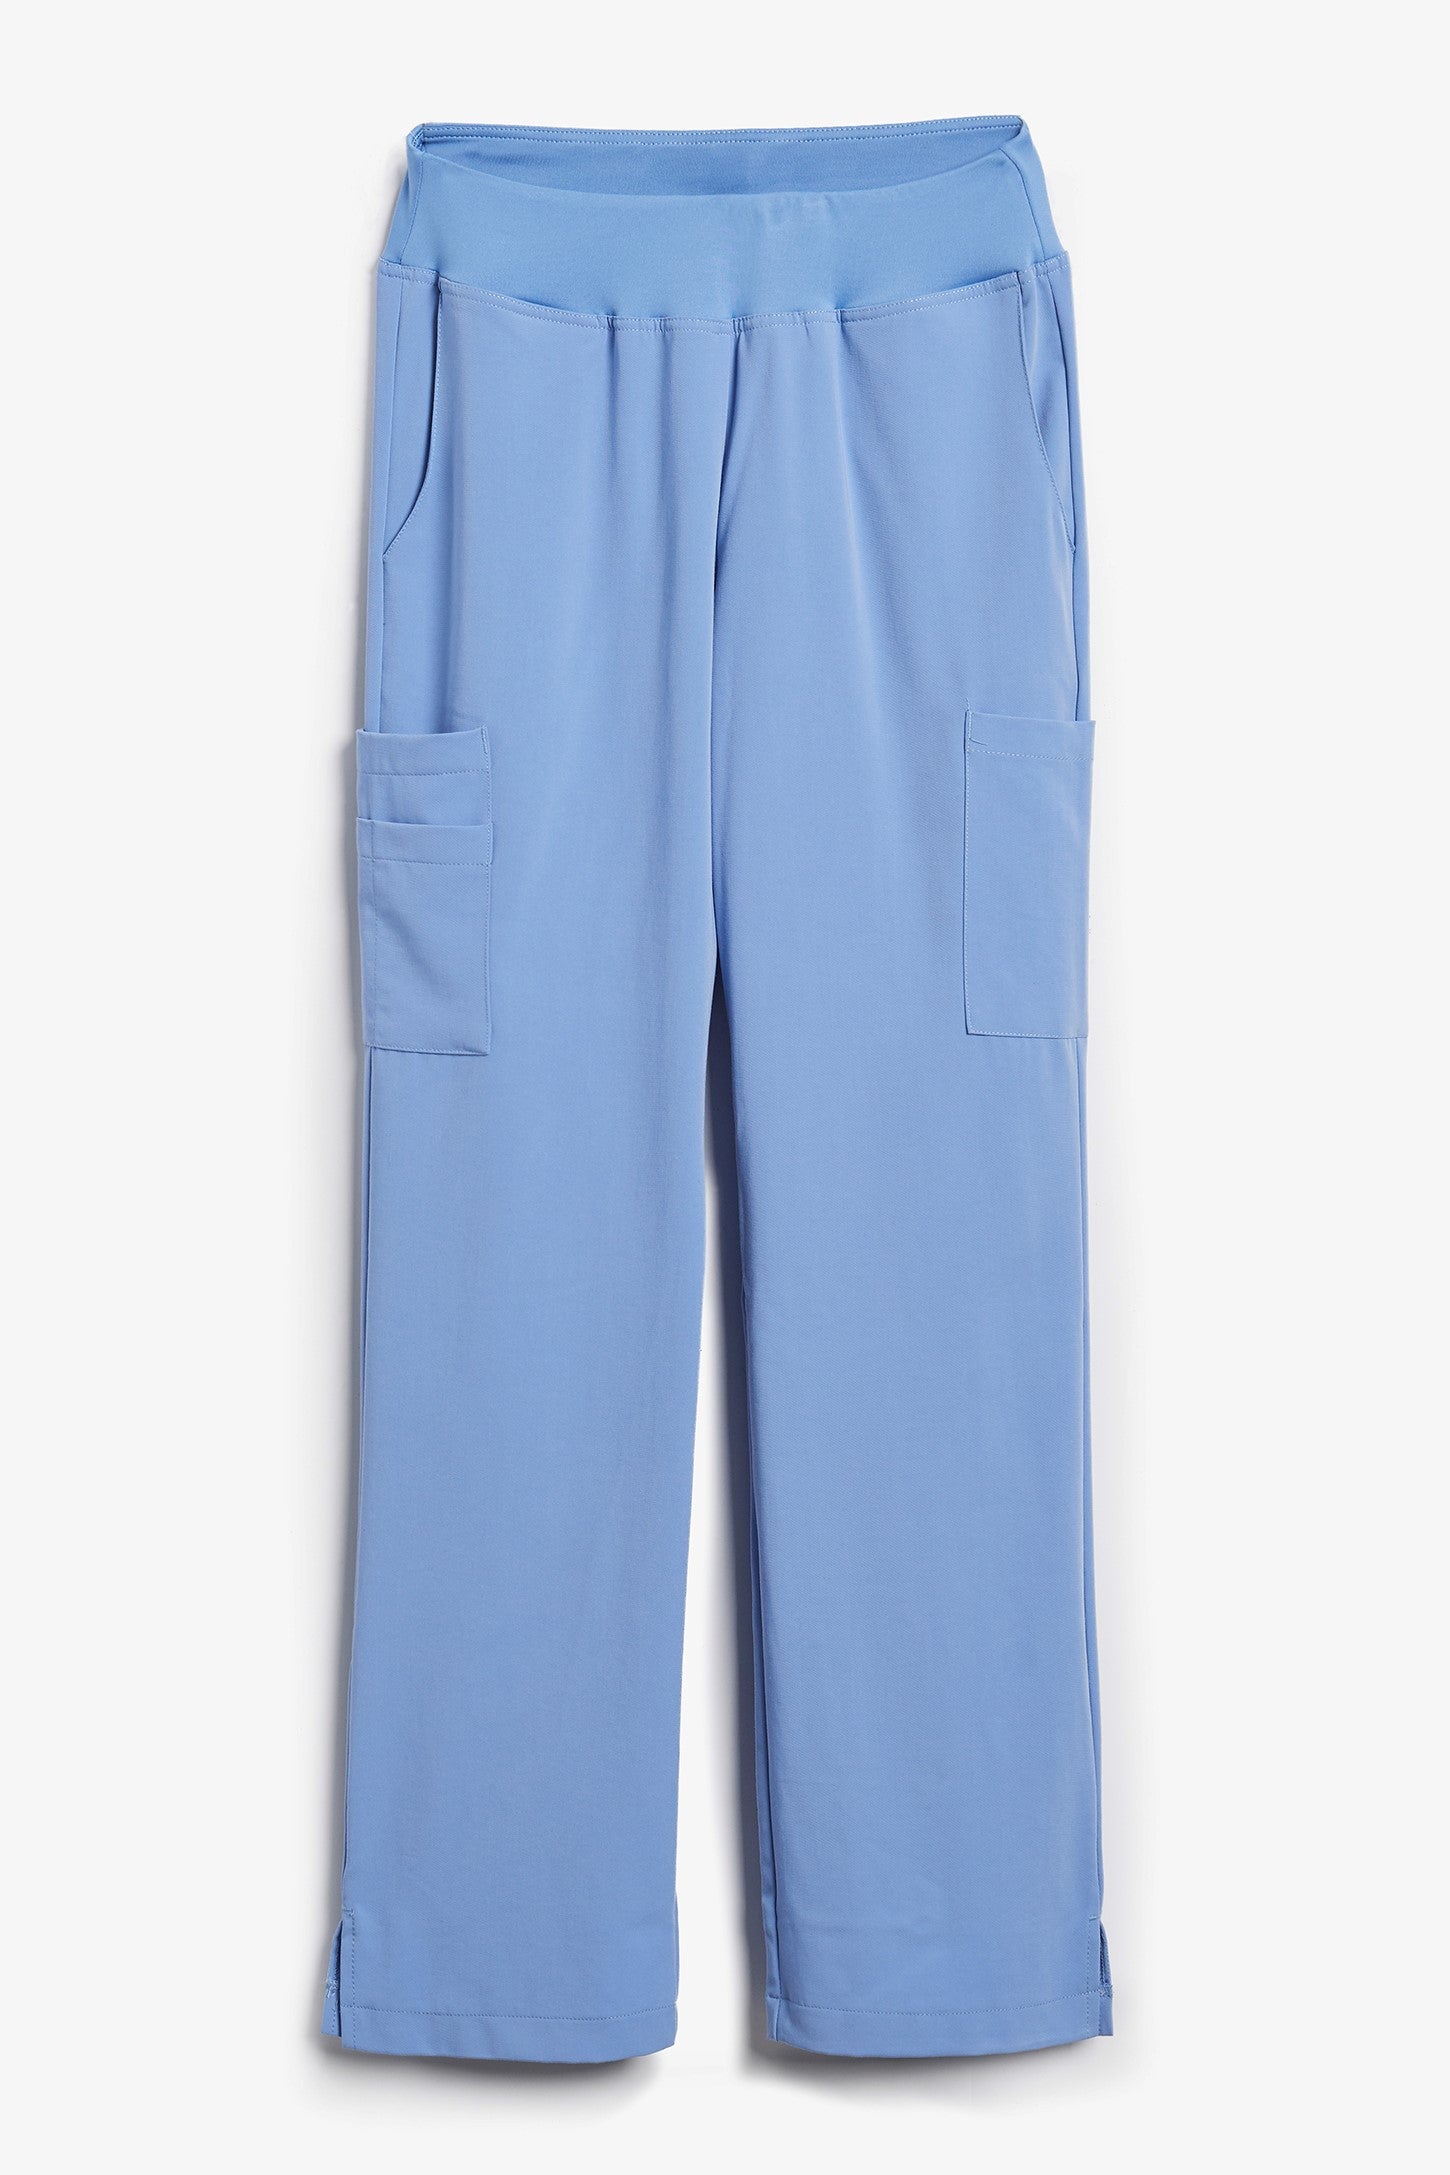 Pantalon yoga uniforme infirmière - Femme && BLEU CIEL